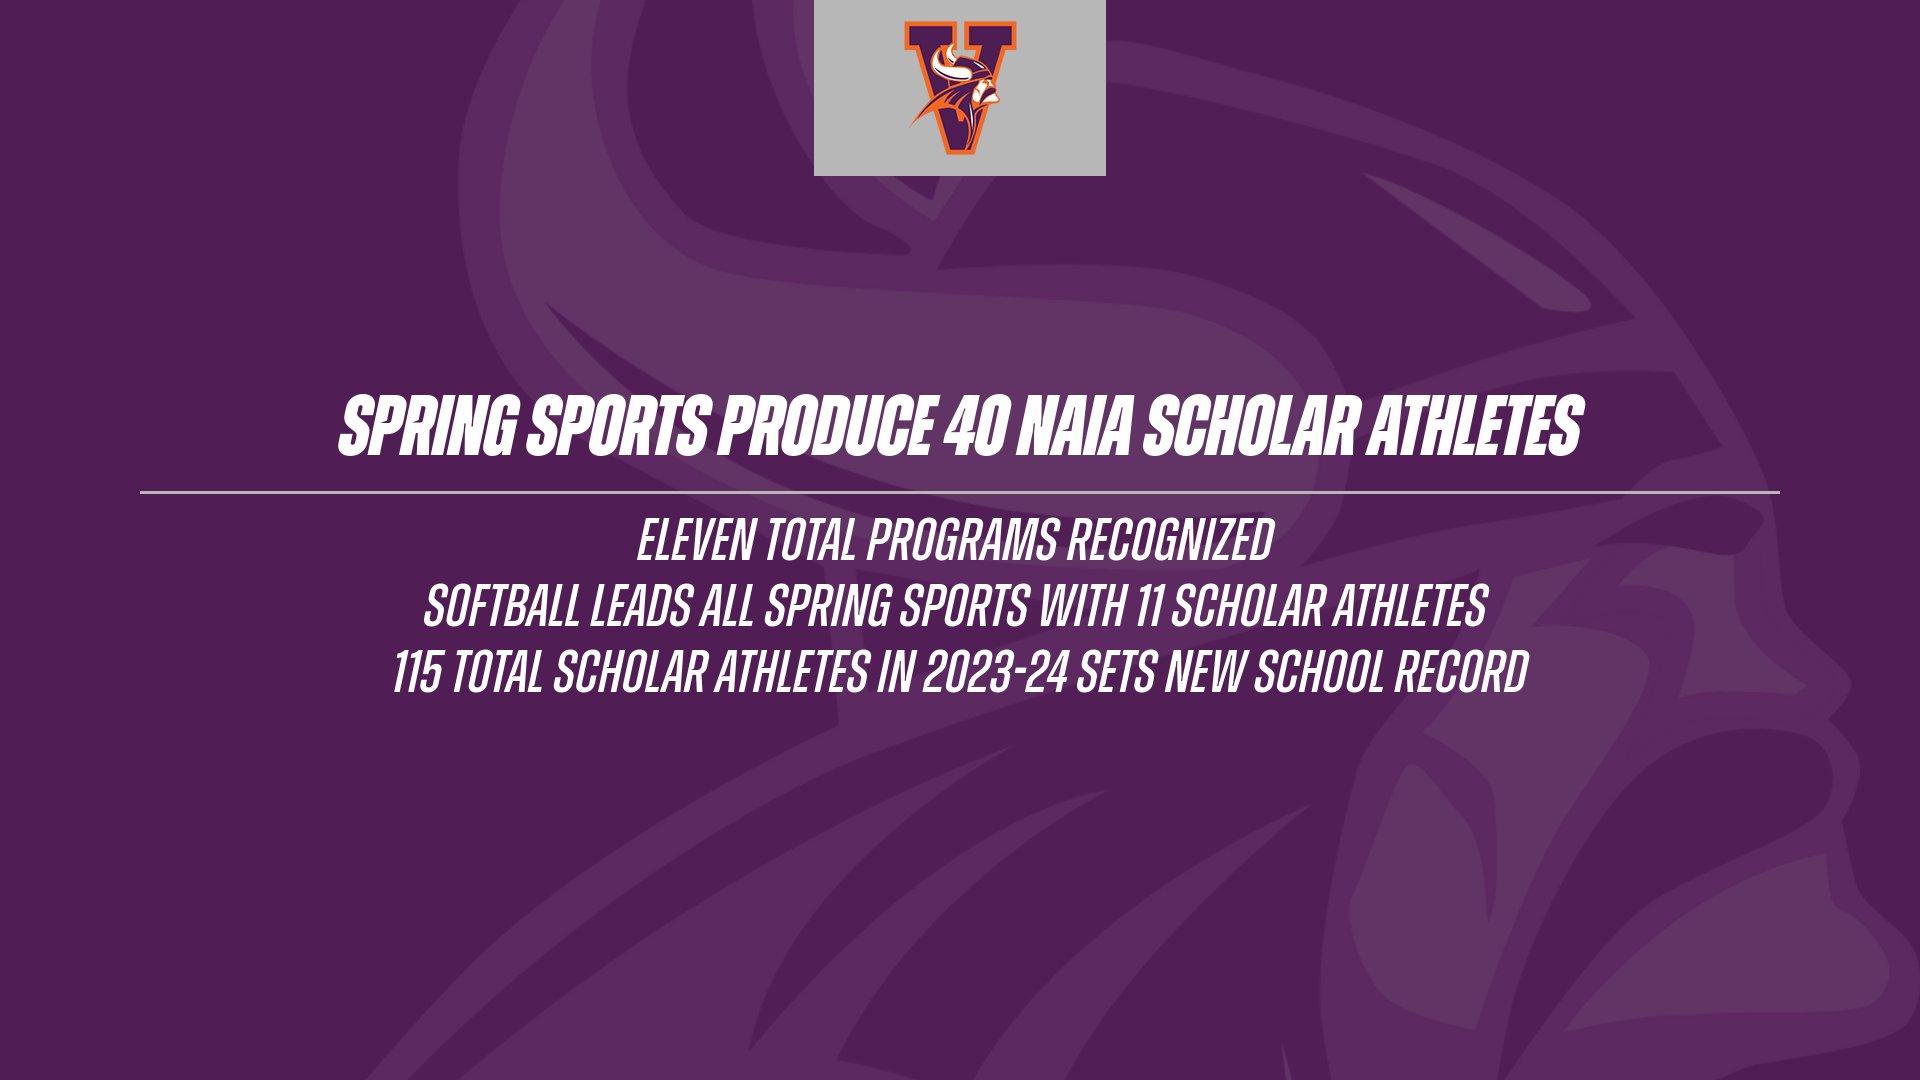 Spring NAIA Scholar Athletes Recognized, New Department Record Set